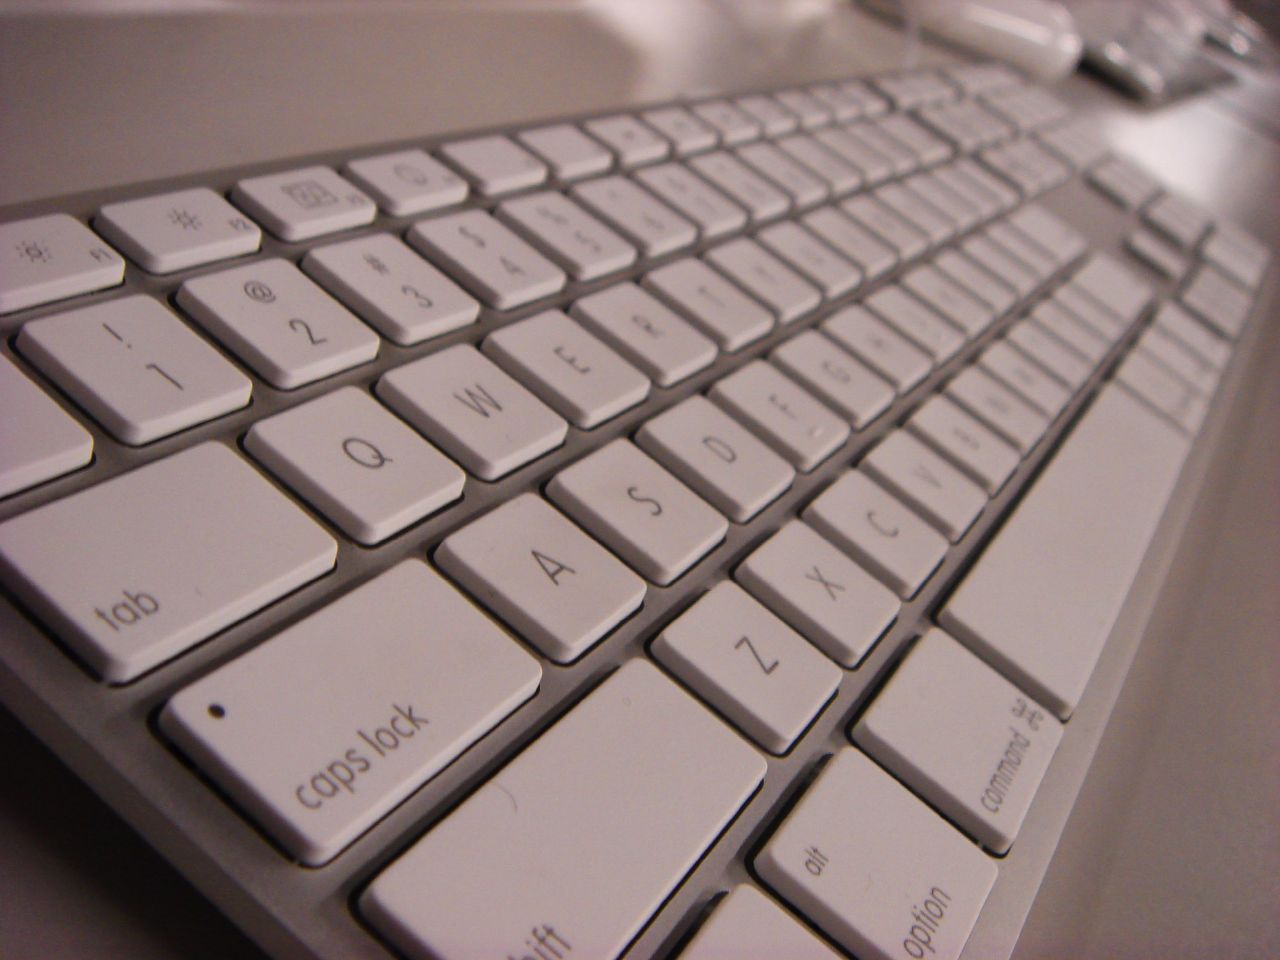 sleek new imac keyboard.